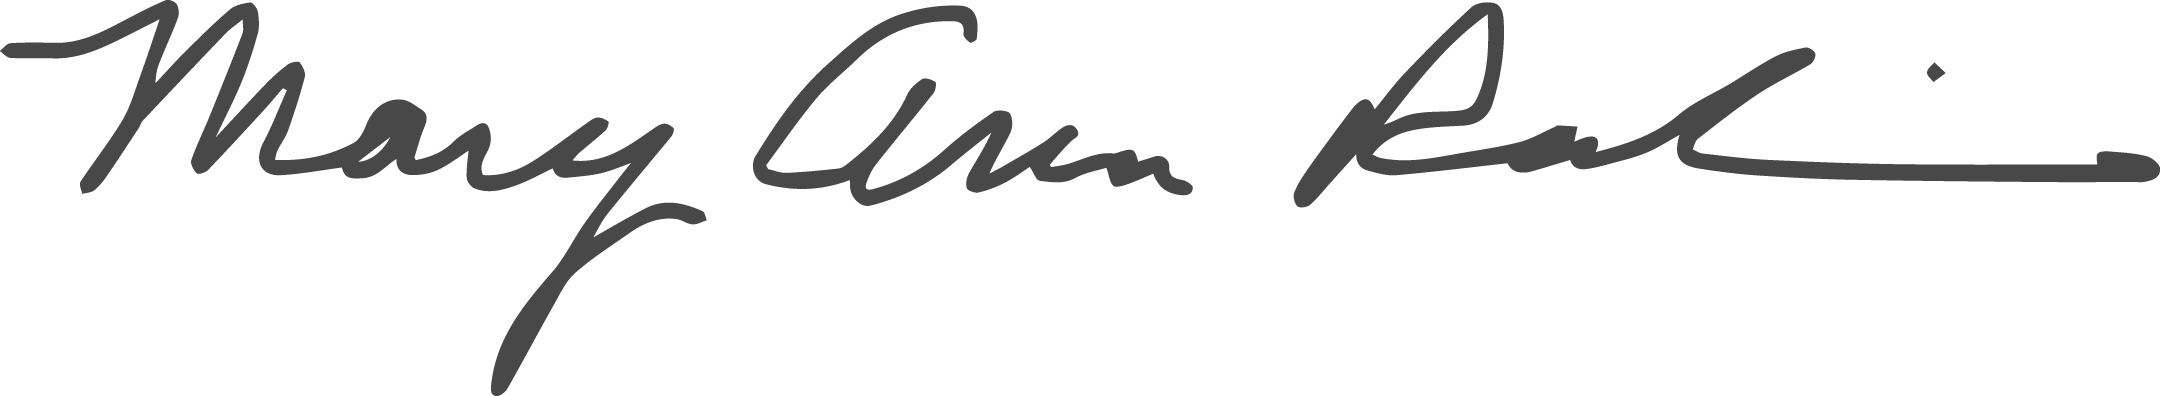 Mary Ann Rankin signature